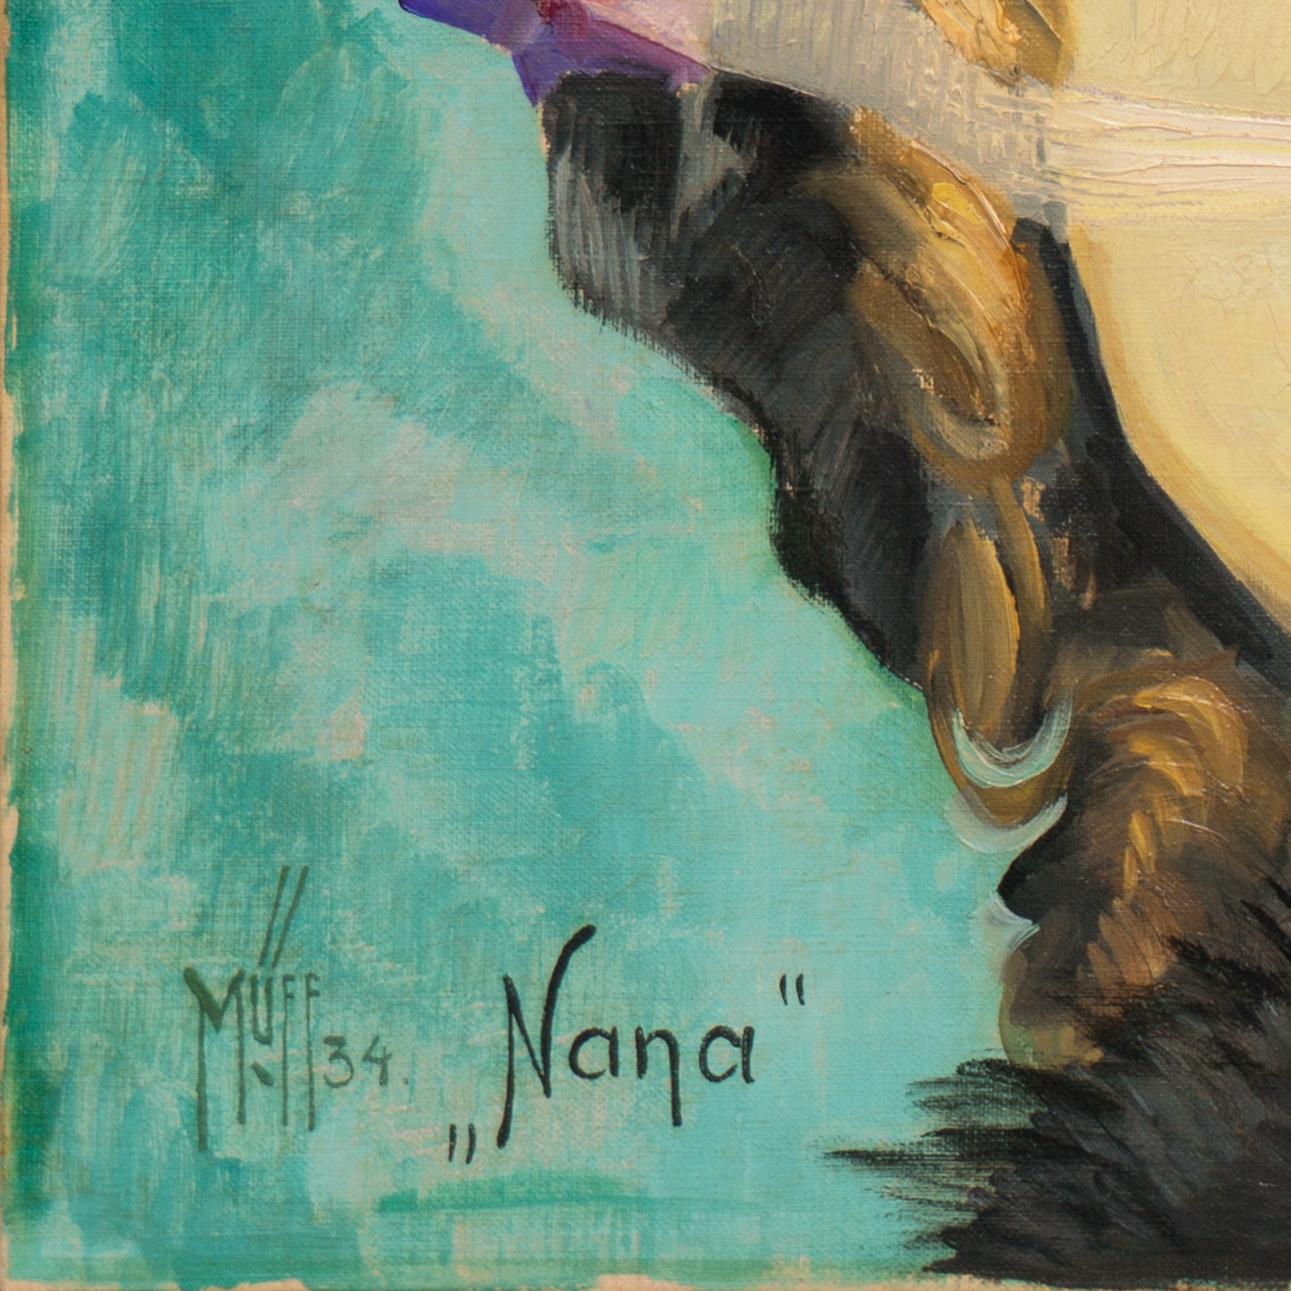 'Nana', Art Deco, Paris, Berlin, Weimar Republic, Max Reinhardt Theater, Smoking - Painting by Orla Muff